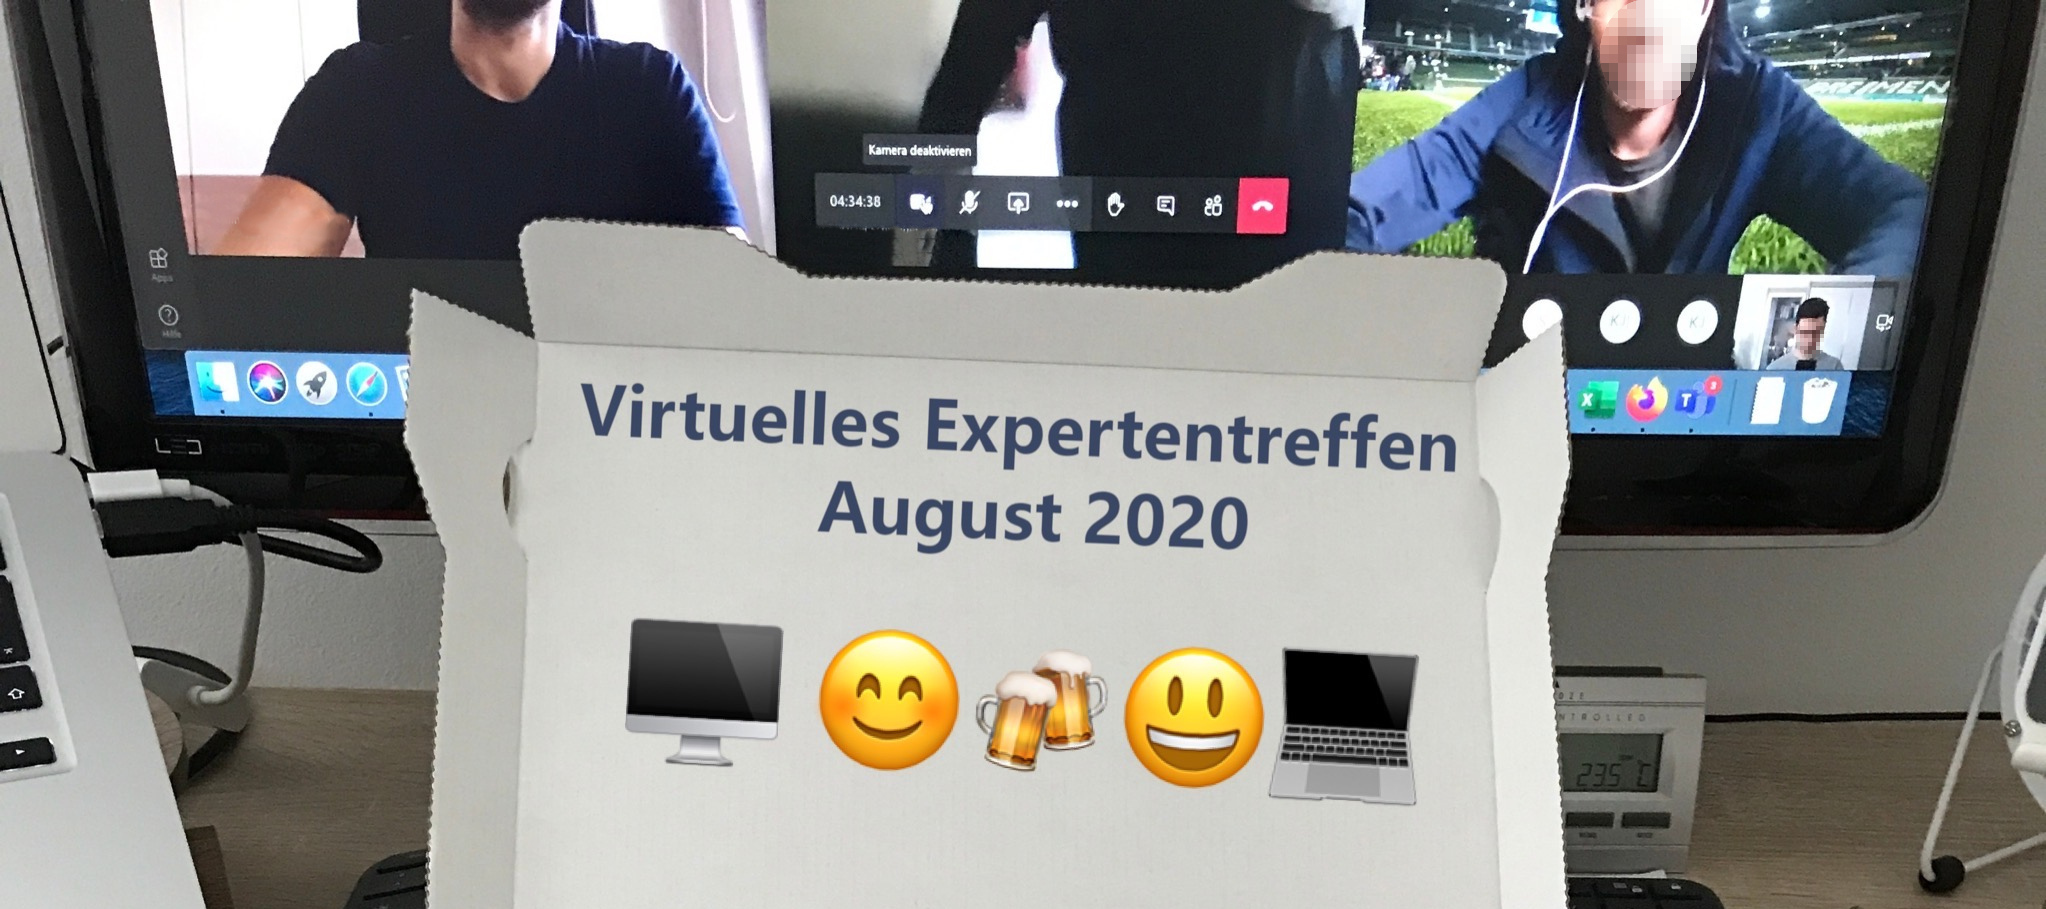 1. Virtuelles Expertentreffen der o2 Community Experten 2020